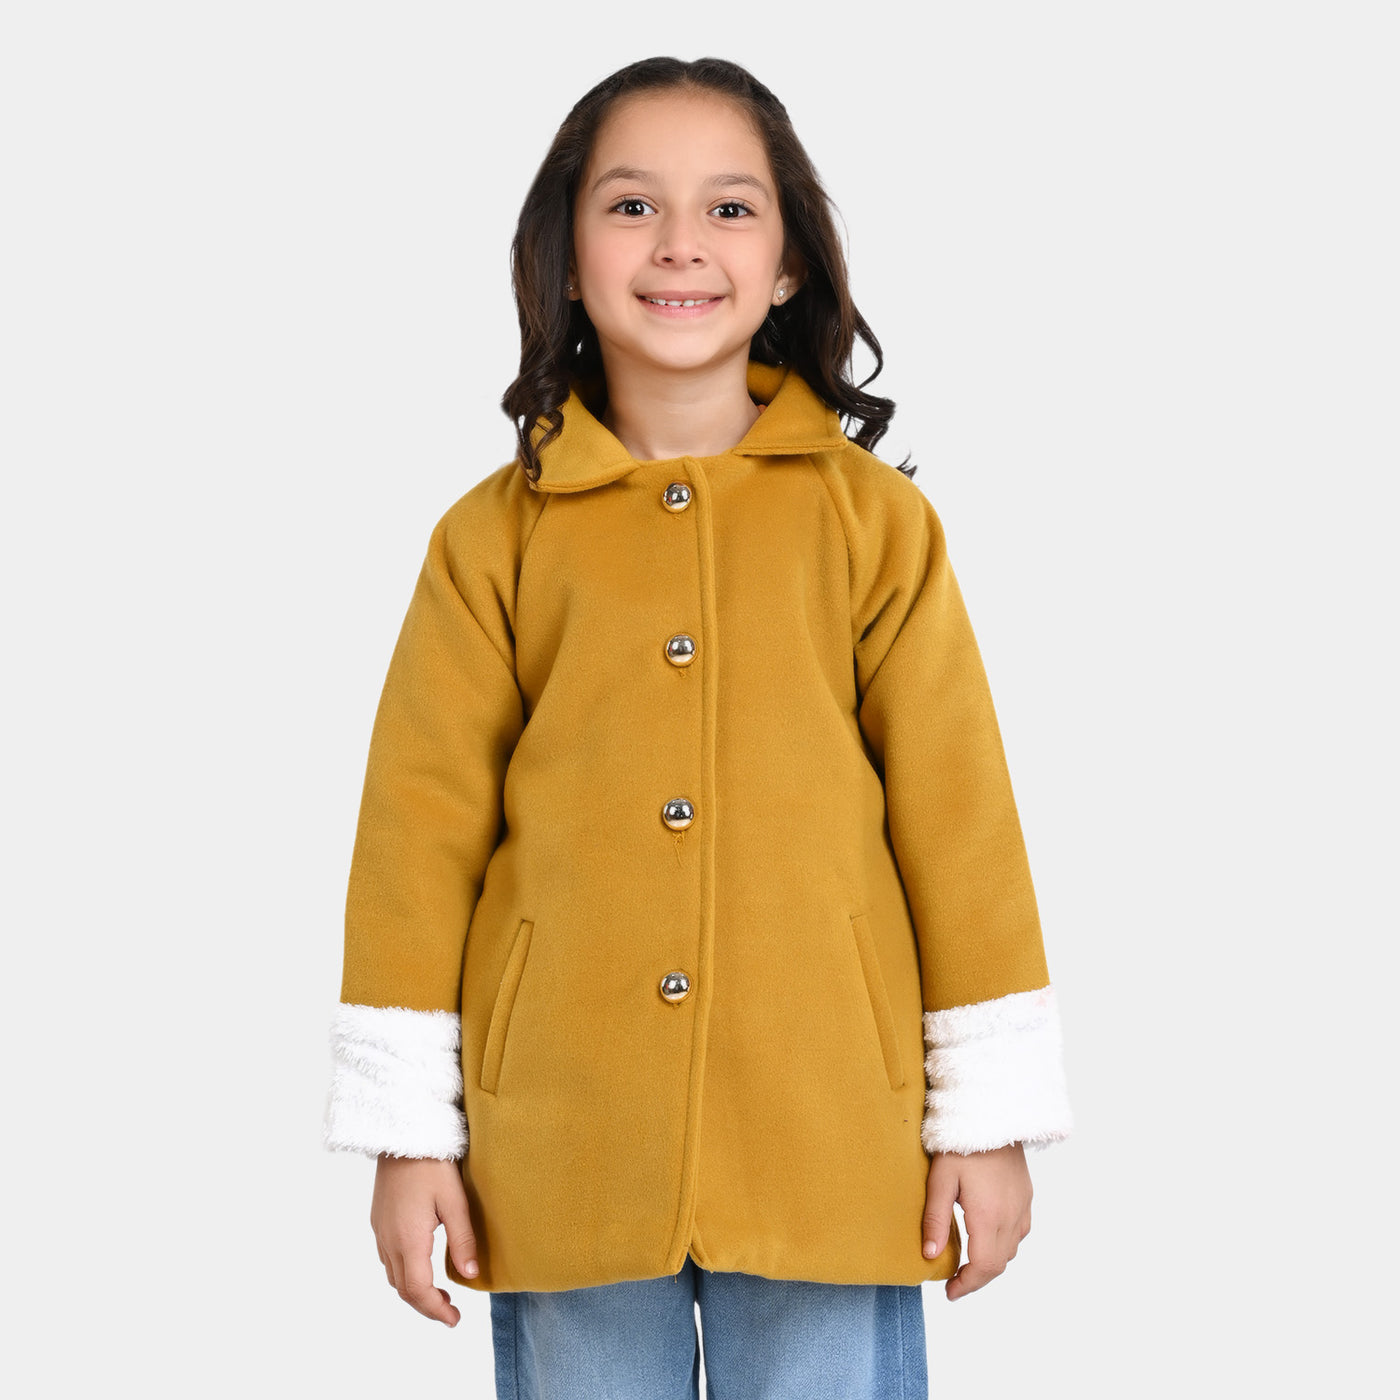 Girls Wool Woven Jacket - Mustard